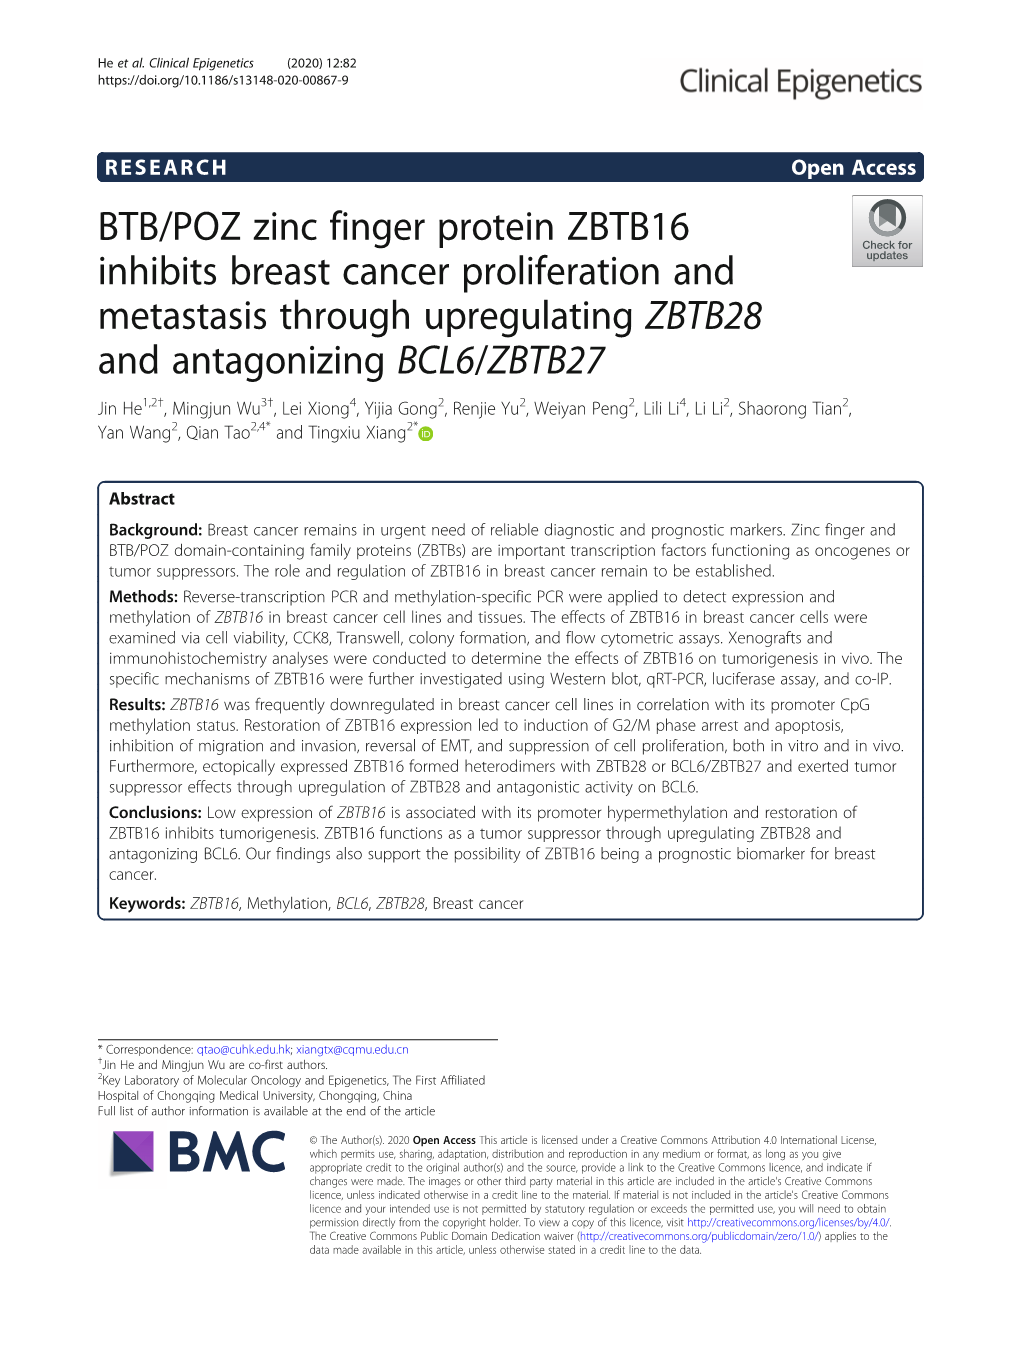 BTB/POZ Zinc Finger Protein ZBTB16 Inhibits Breast Cancer Proliferation